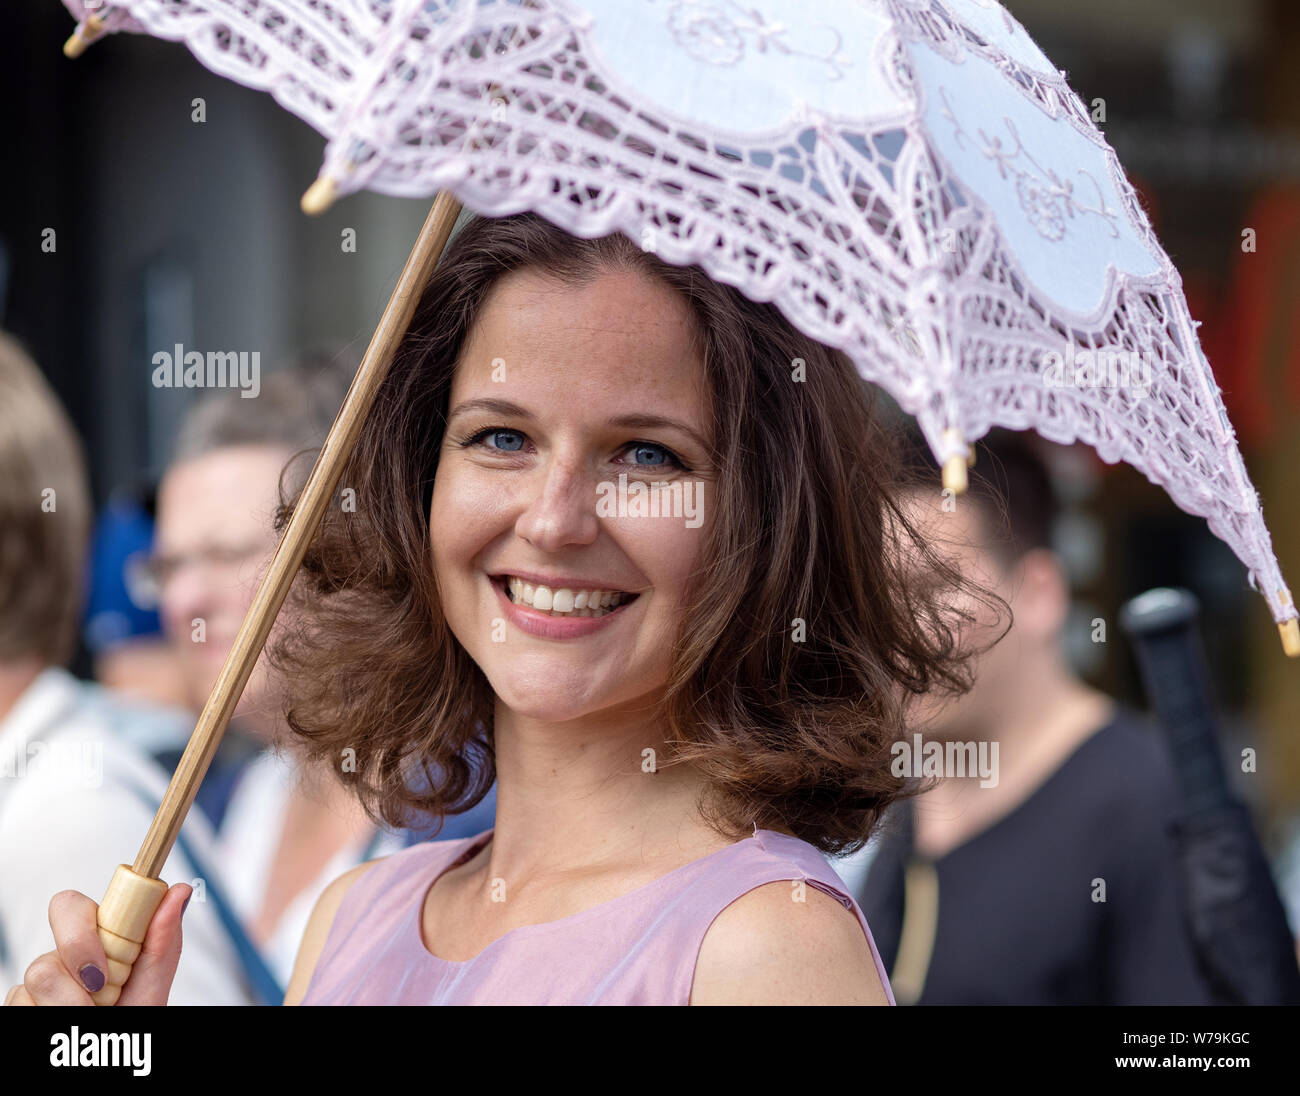 Female street performer with smiling face and white brolly, Edinburgh Festival Fringe 2019 - The Royal Mile, Edinburgh, Scotland, UK. Stock Photo